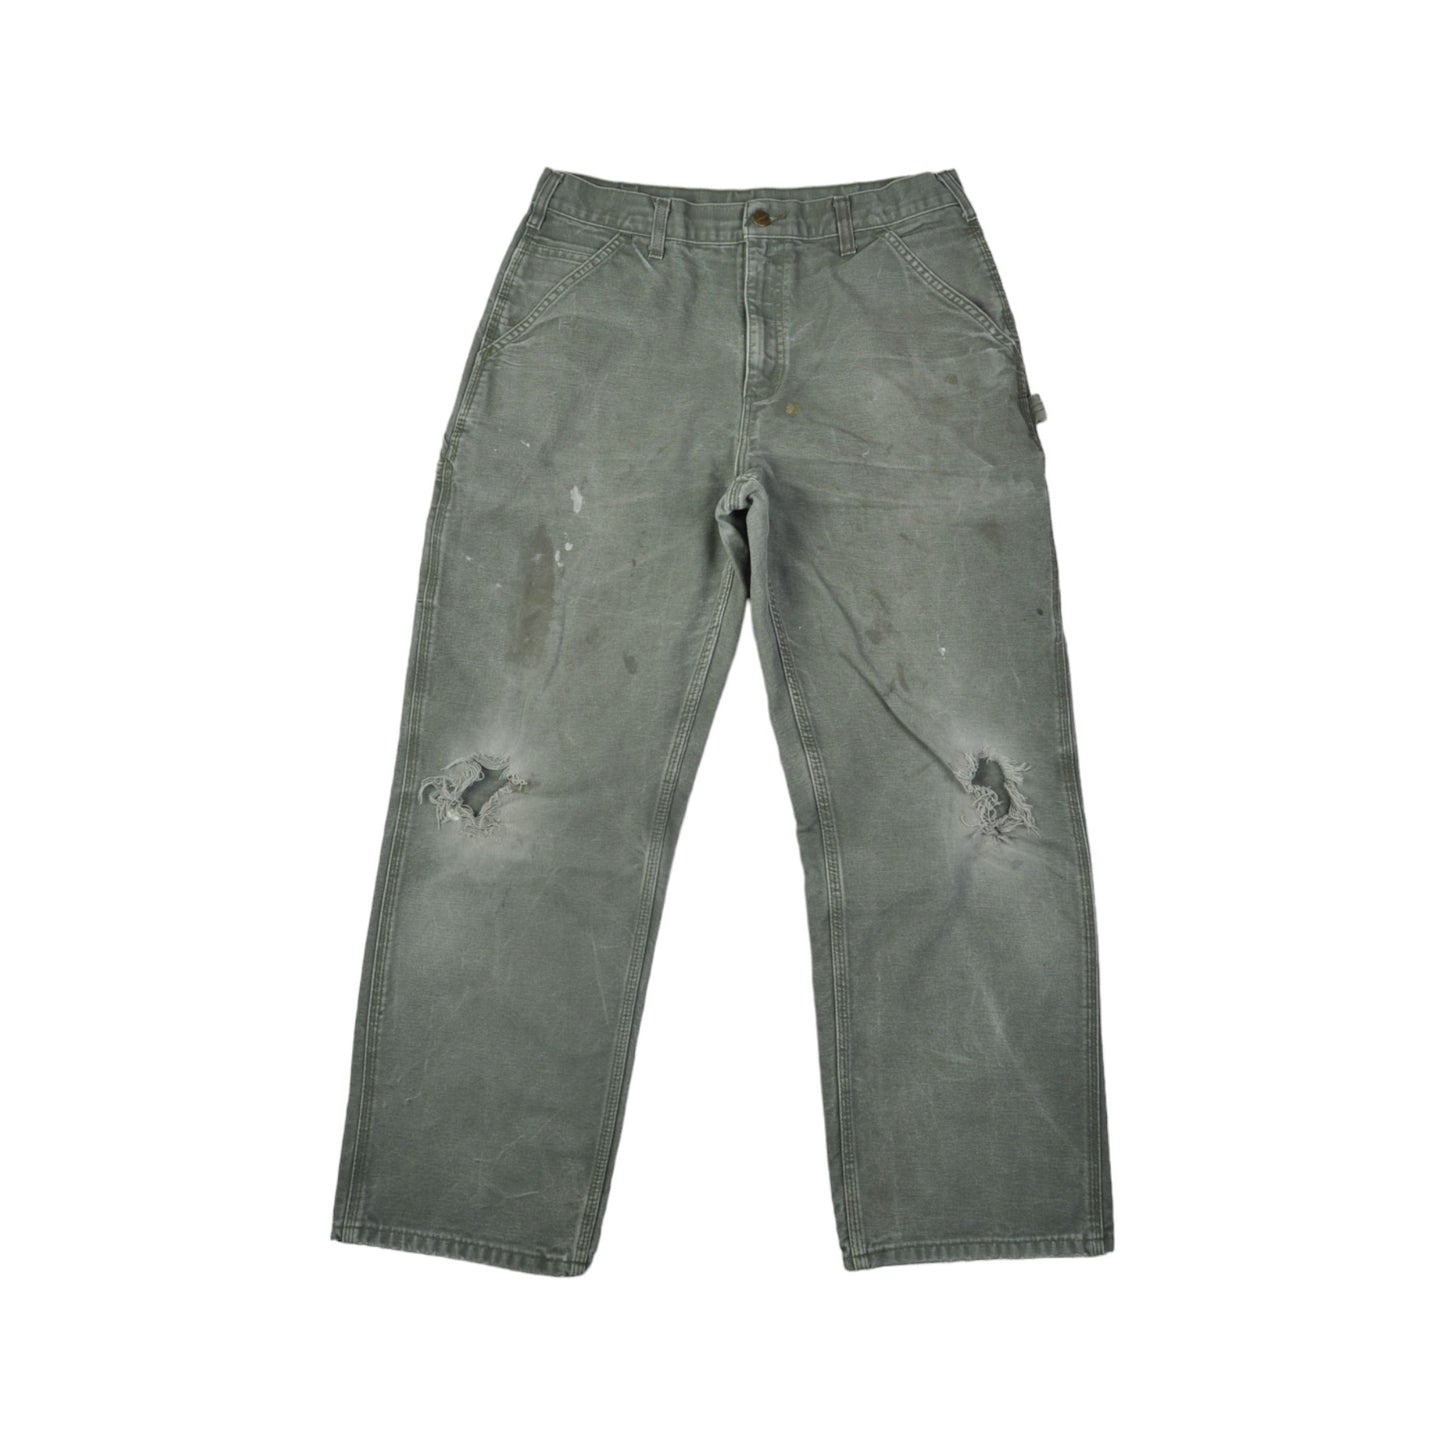 Vintage Carhartt Carpenter Dungaree Fit Pants Khaki W33 L30